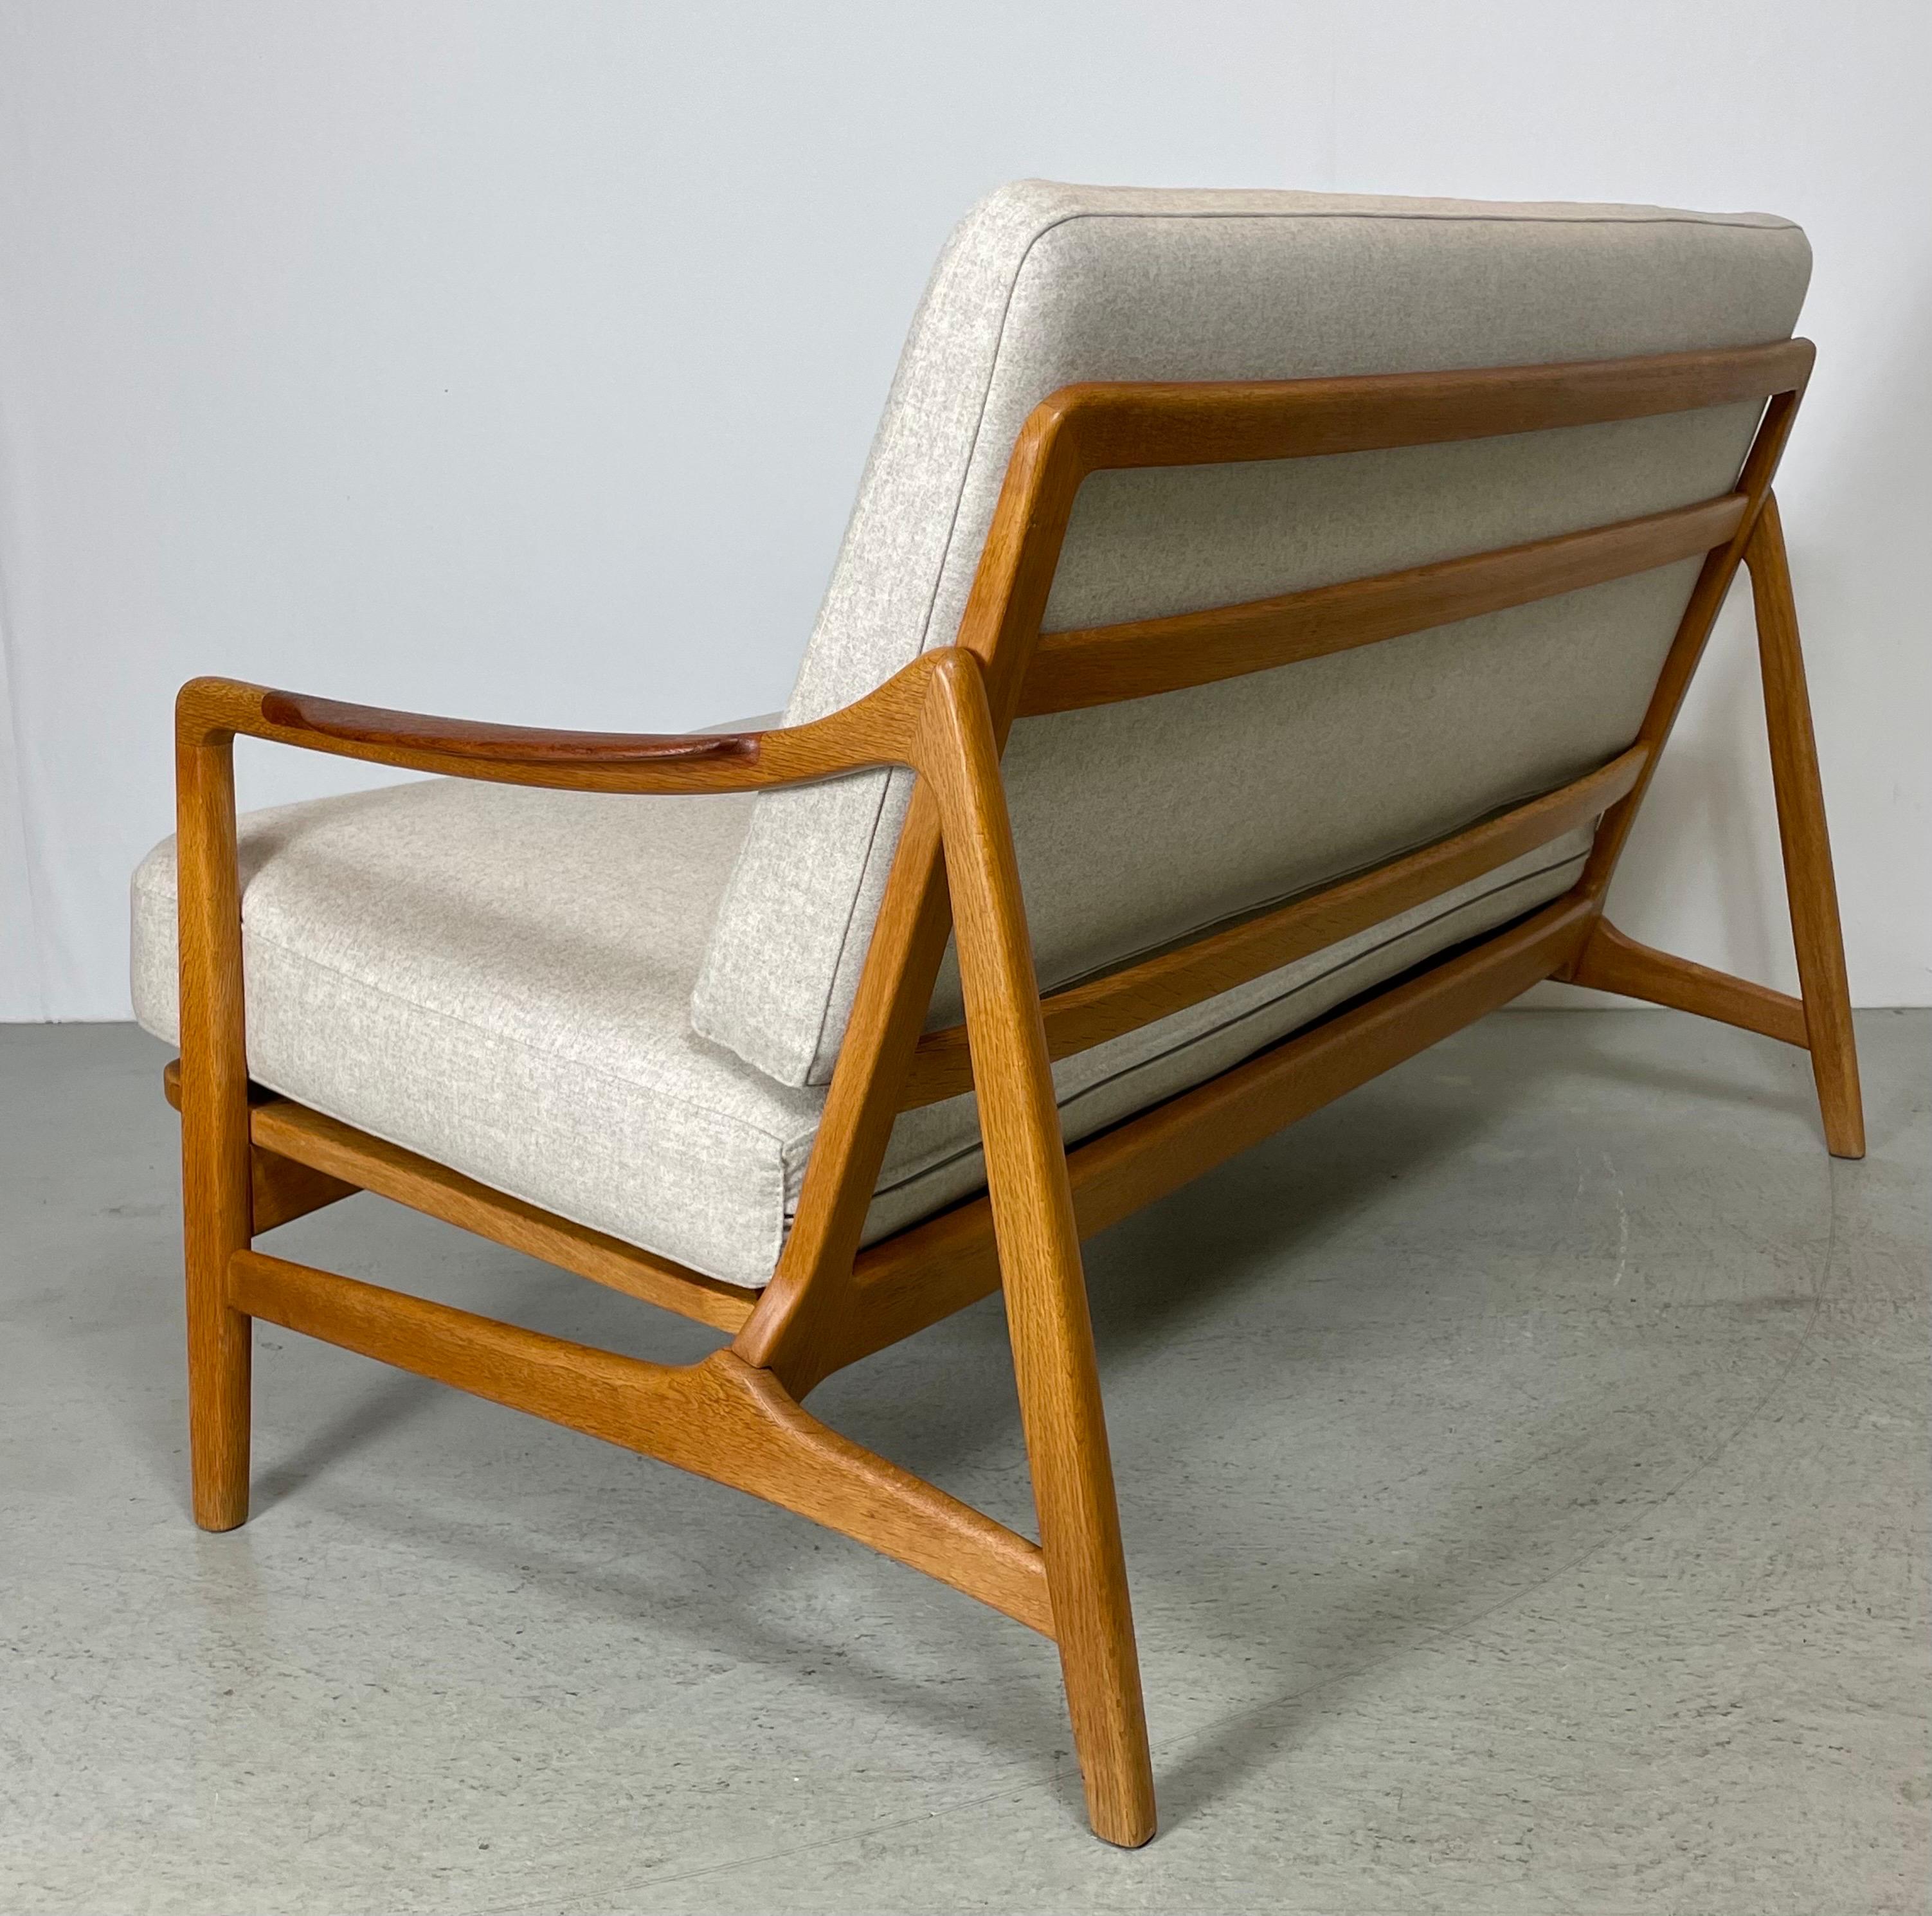  Danish Mid-Century Sofa by Tove & Edward Kindt-Larsen, Denmark 1950s For Sale 9